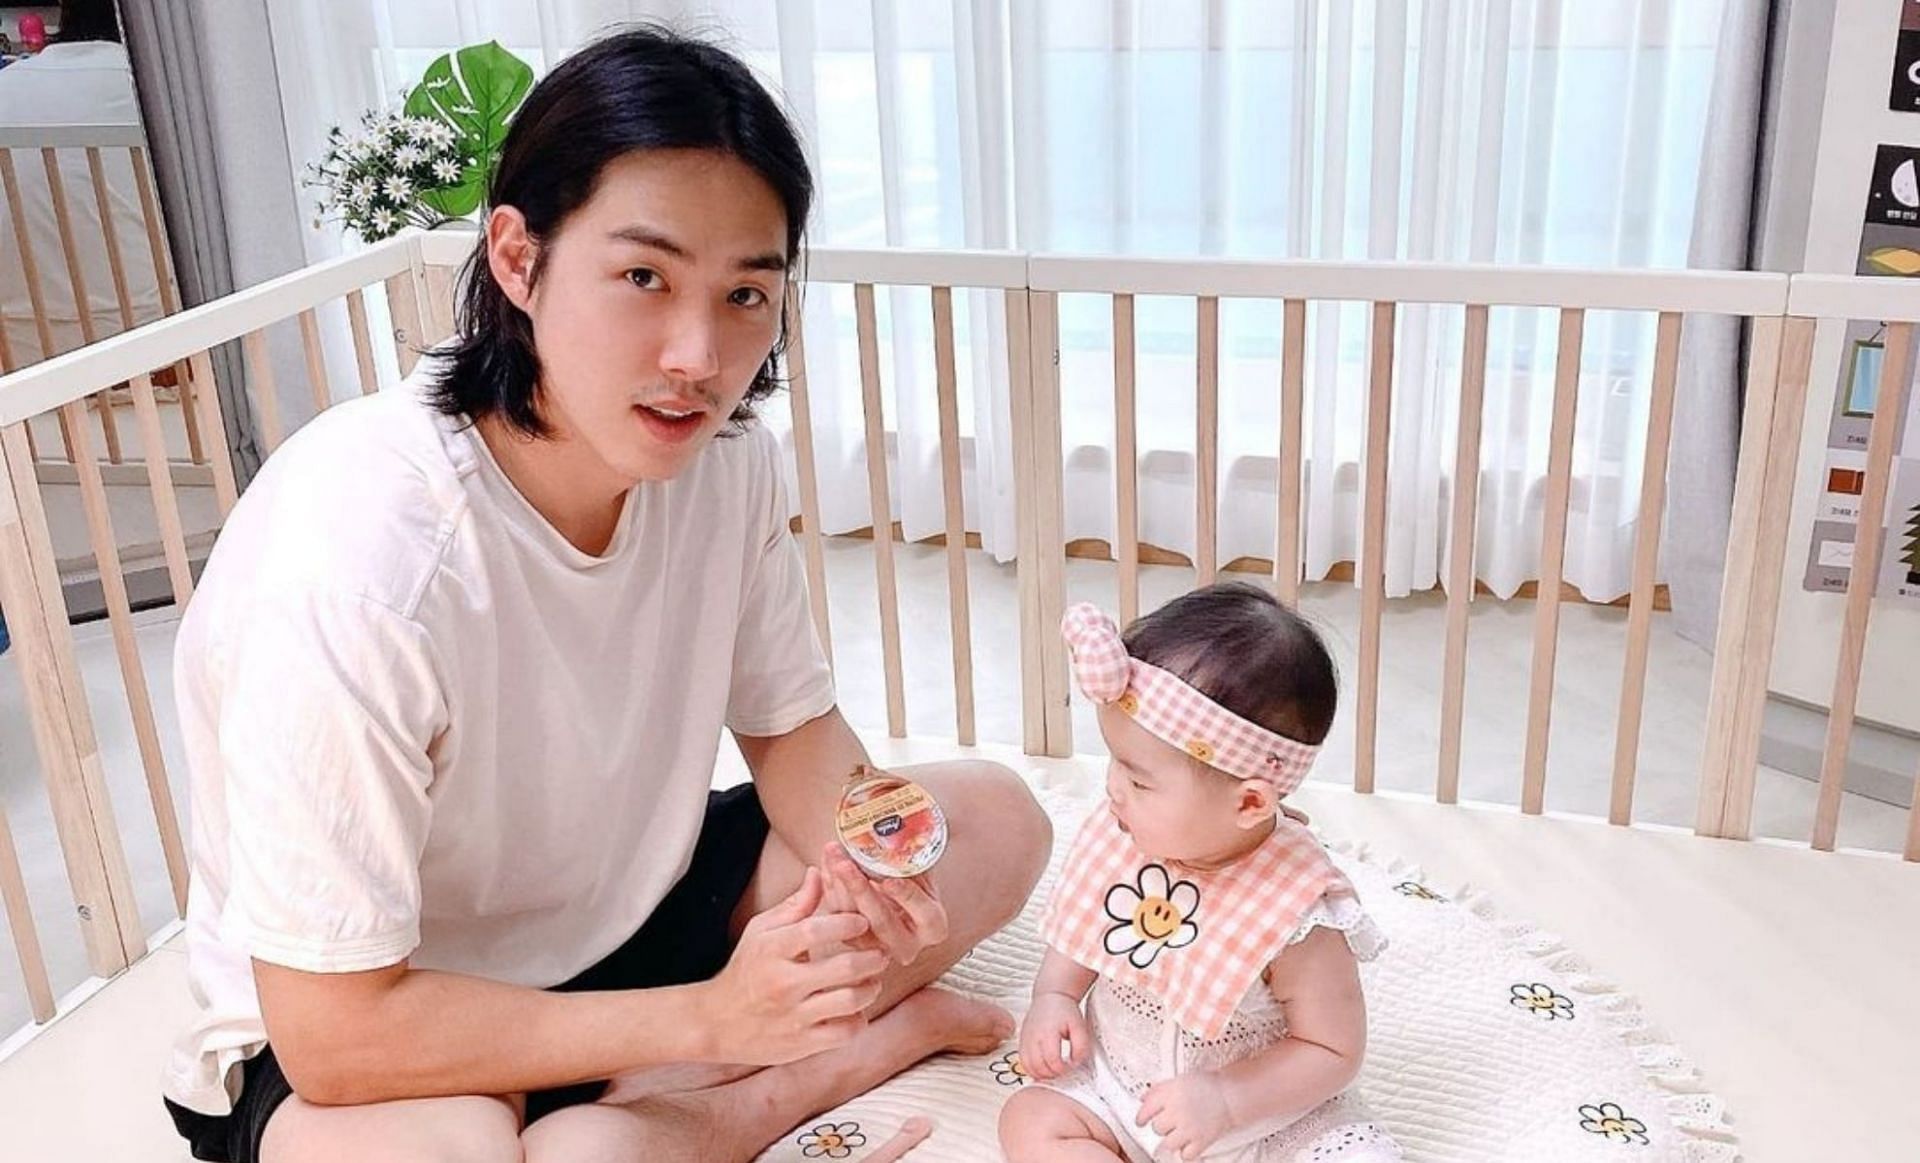 Baek Sung-hyun with daughter Seo-yoon (Image via @sunghyun0130/Instagram)